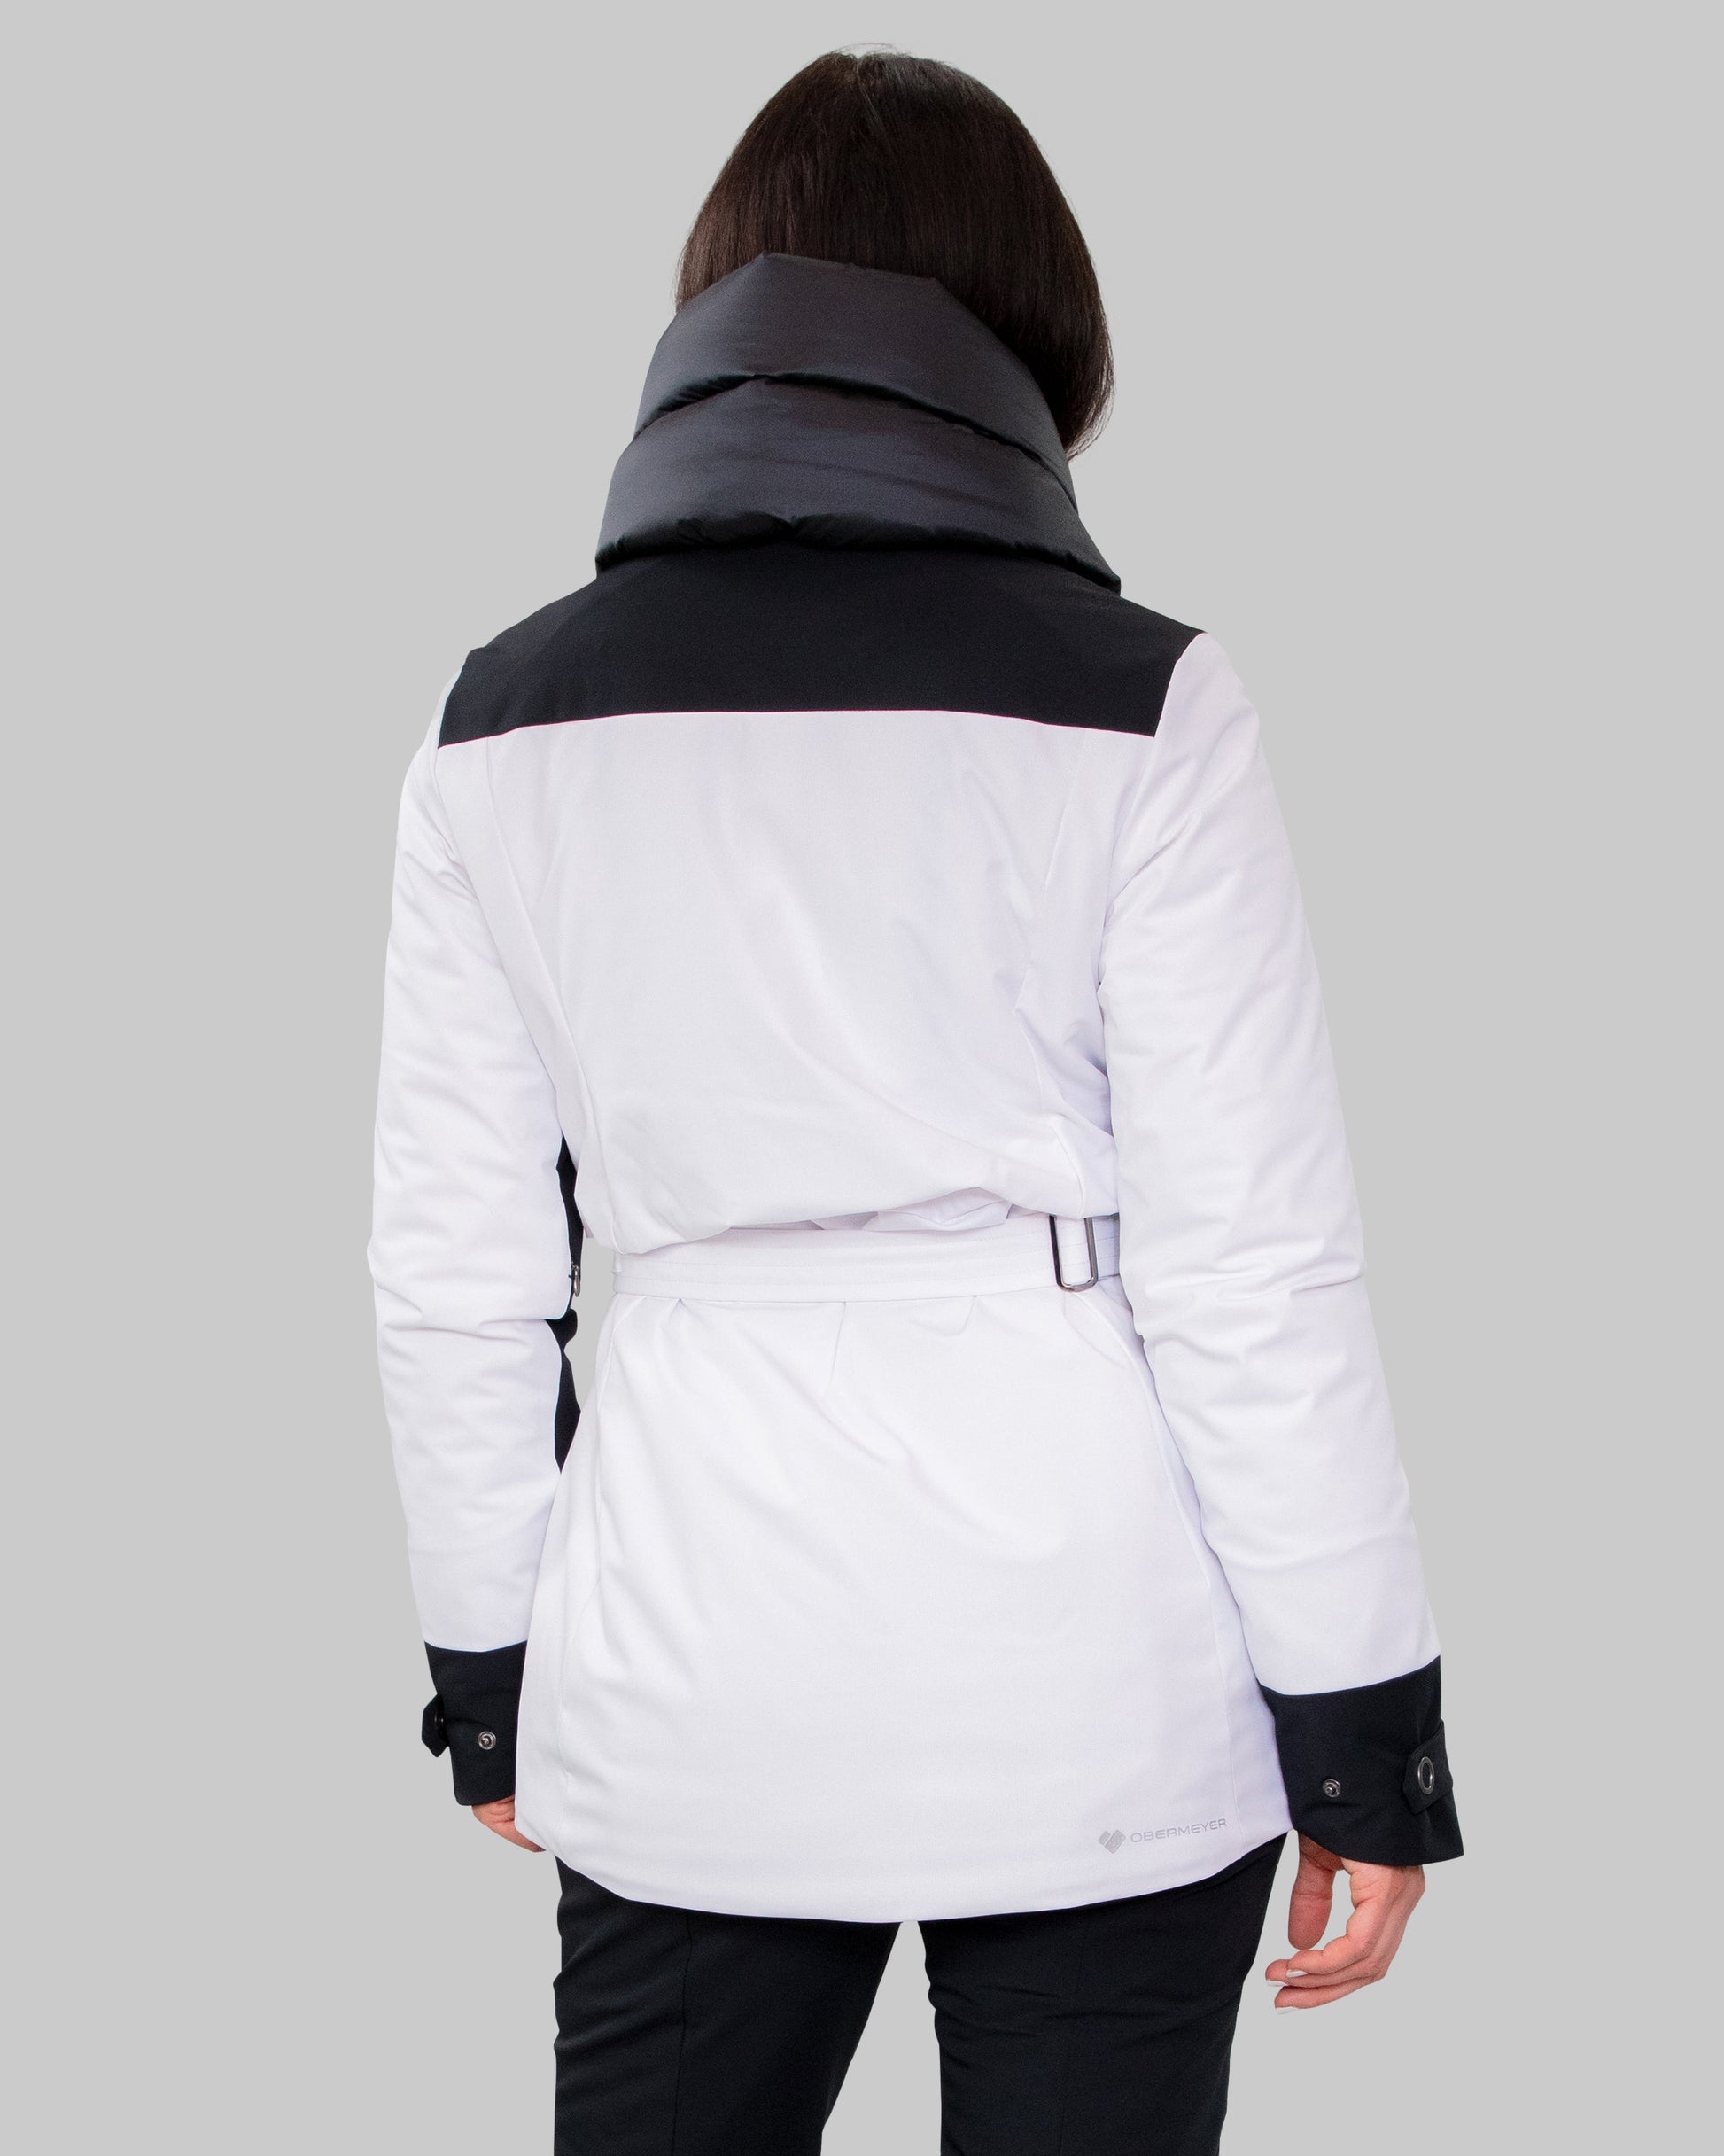 Harmony Jacket – Obermeyer E-Commerce